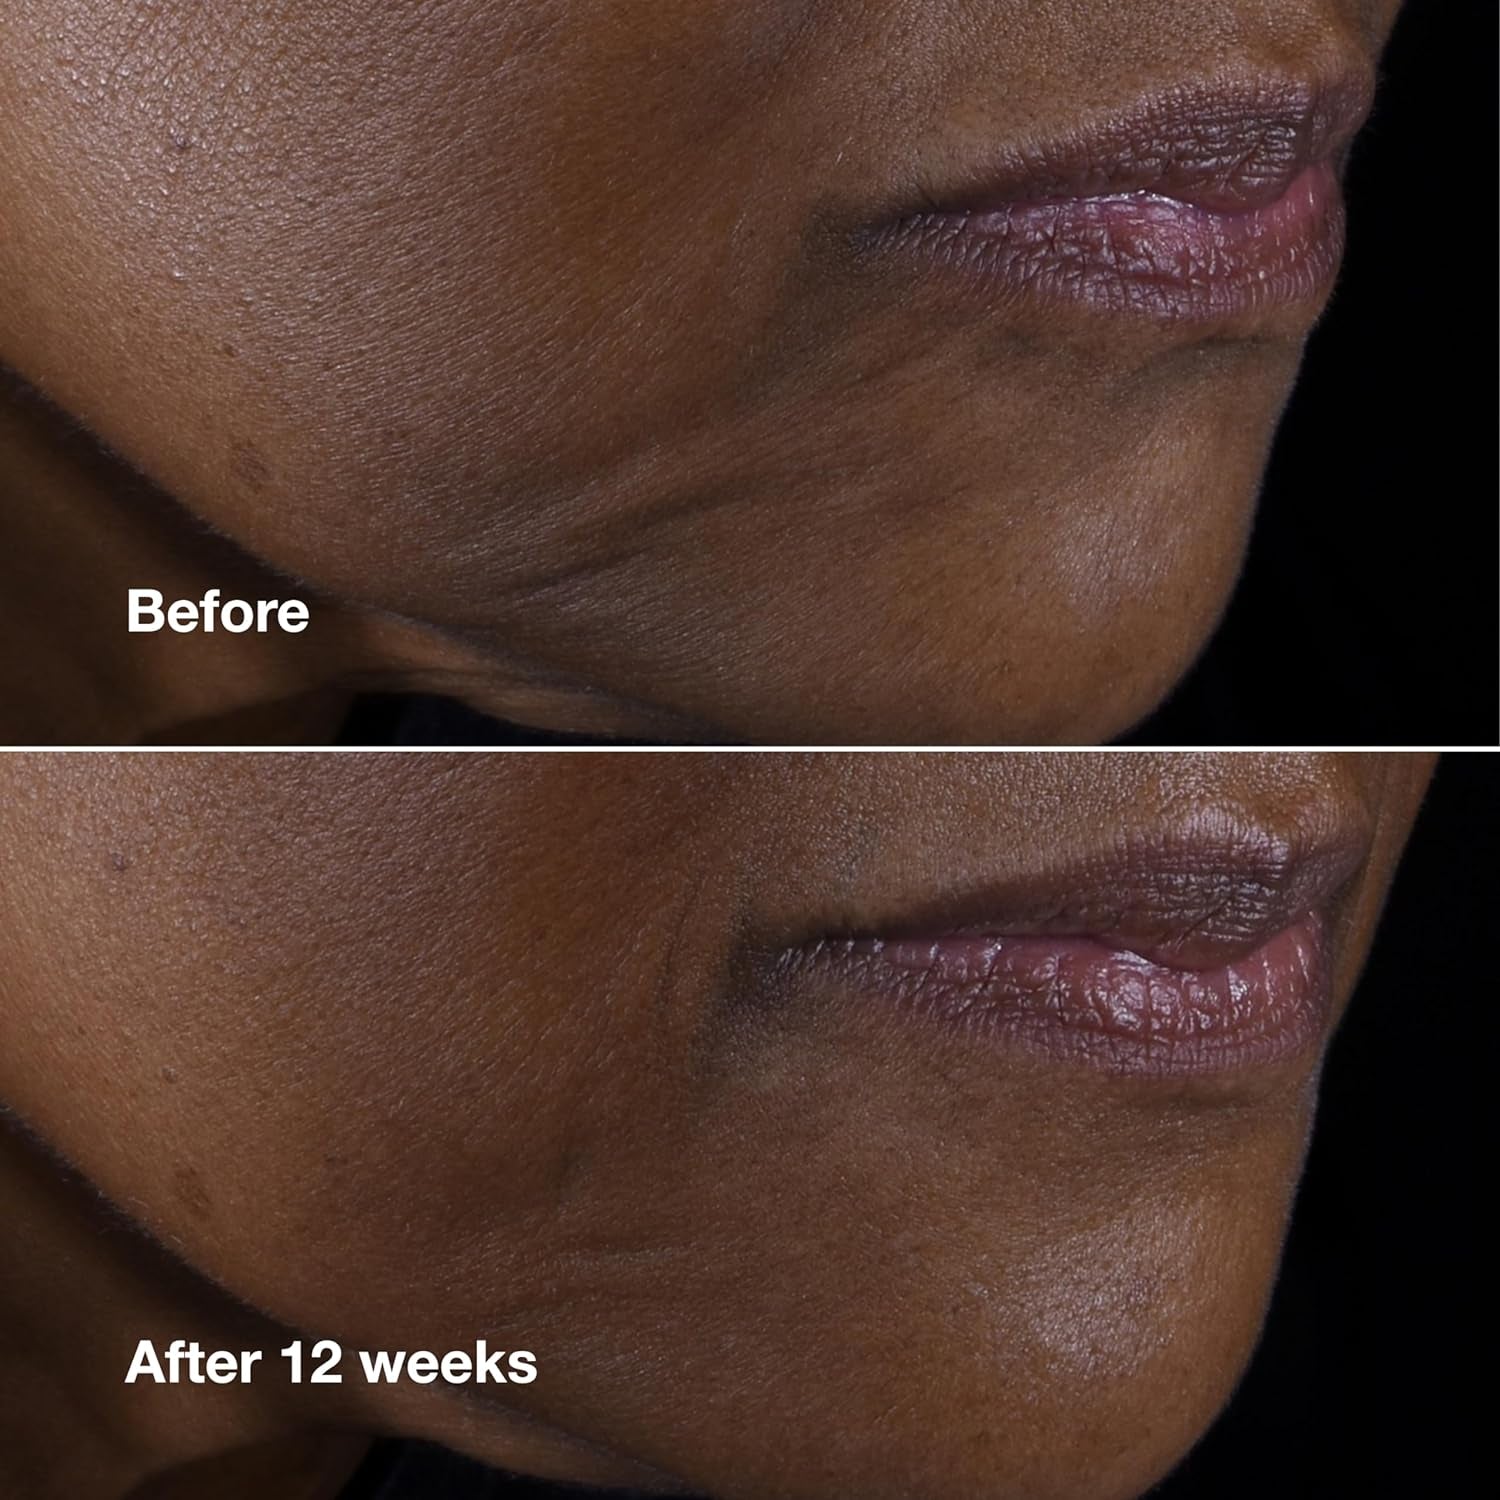 Clinique Smart Clinical Repair Lifting Face + Neck Cream